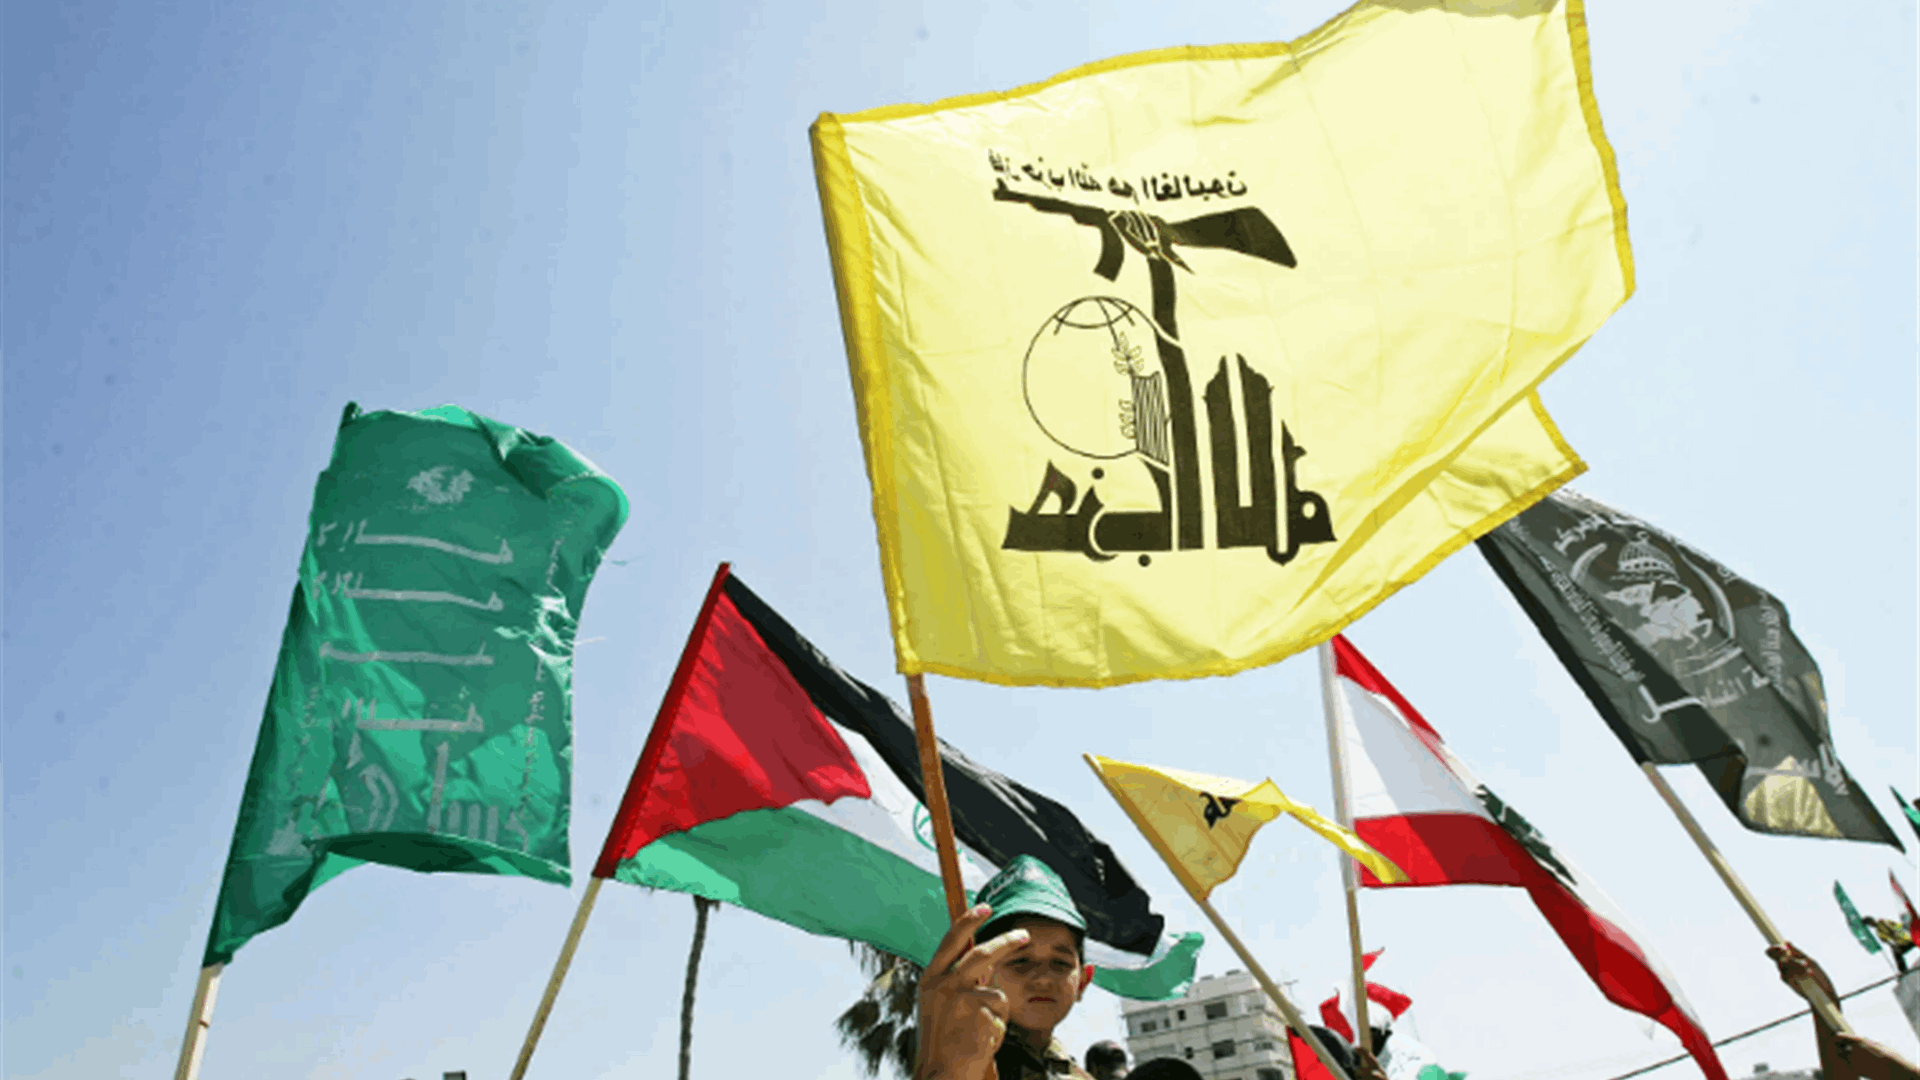 Hamas and Hezbollah dynamics: Hamas in Lebanon retreats on Al-Aqsa Vanguard statement